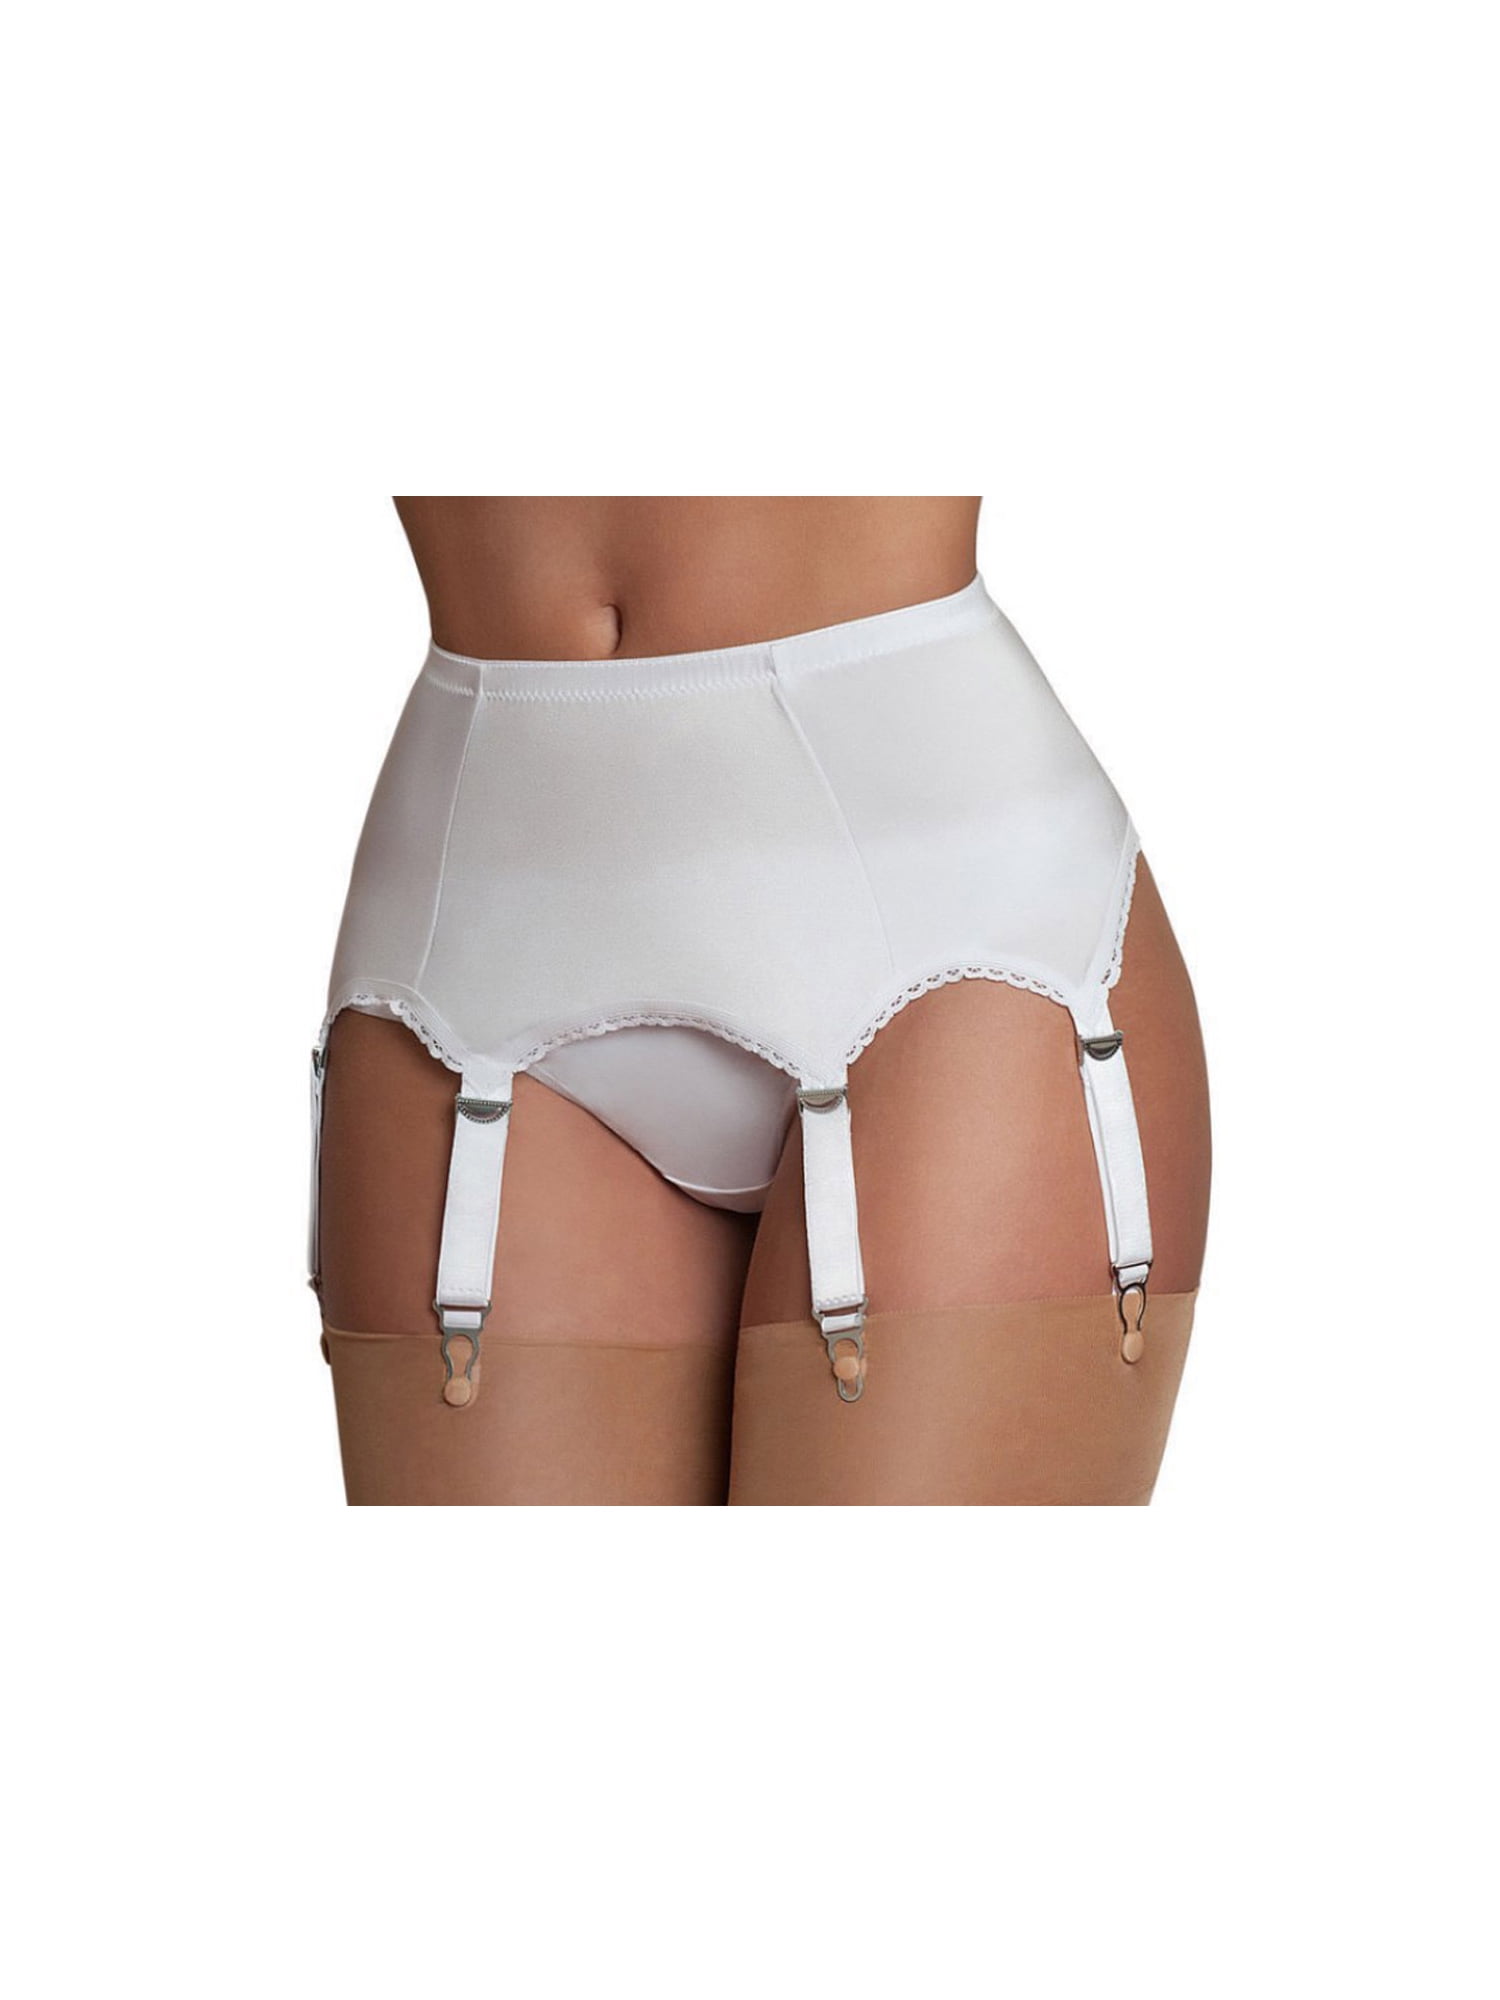 Women's Garter Belt High Mesh Suspender Belt Lingerie Elastic 6 Straps Clip Garters Red, 2XL Walmart.com